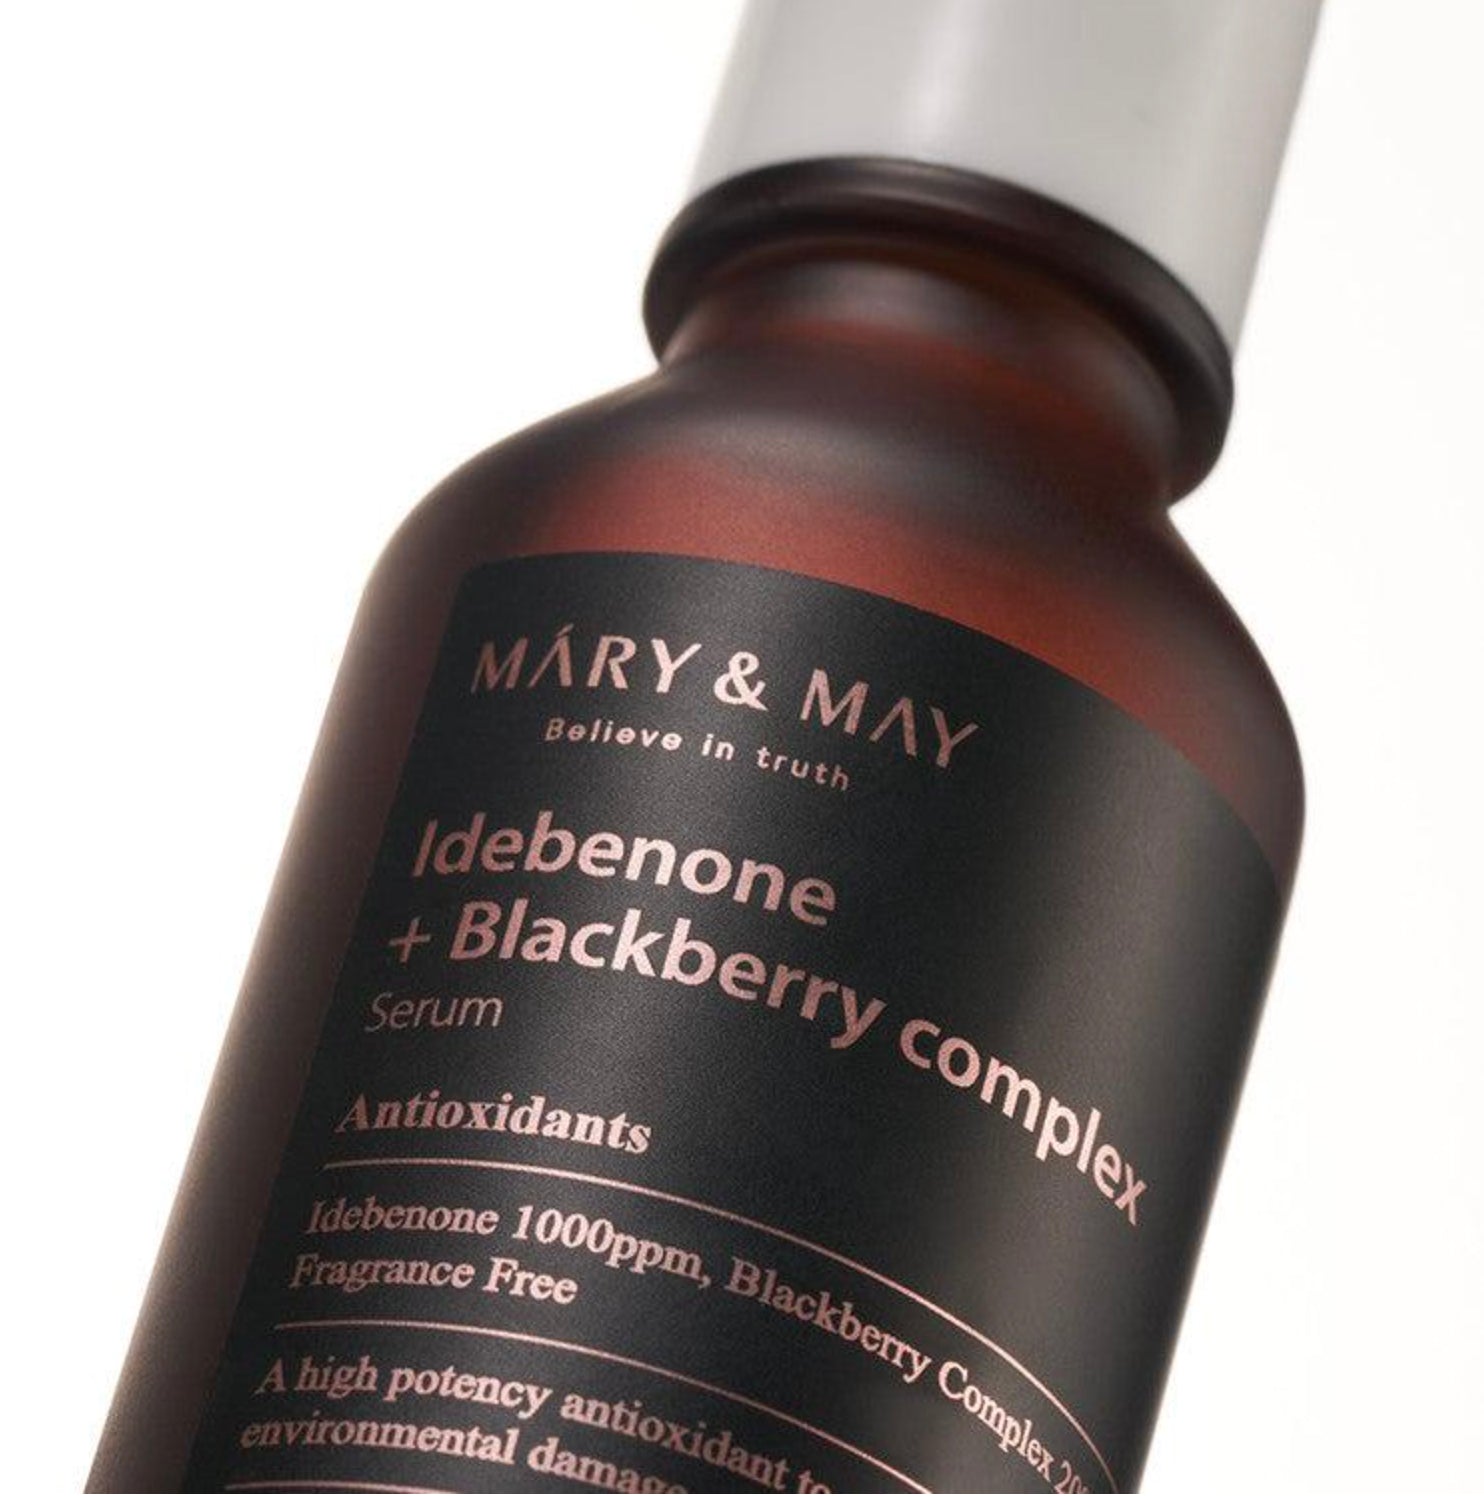 MARY & MAY Idebenone + Blackberry Complex Serum